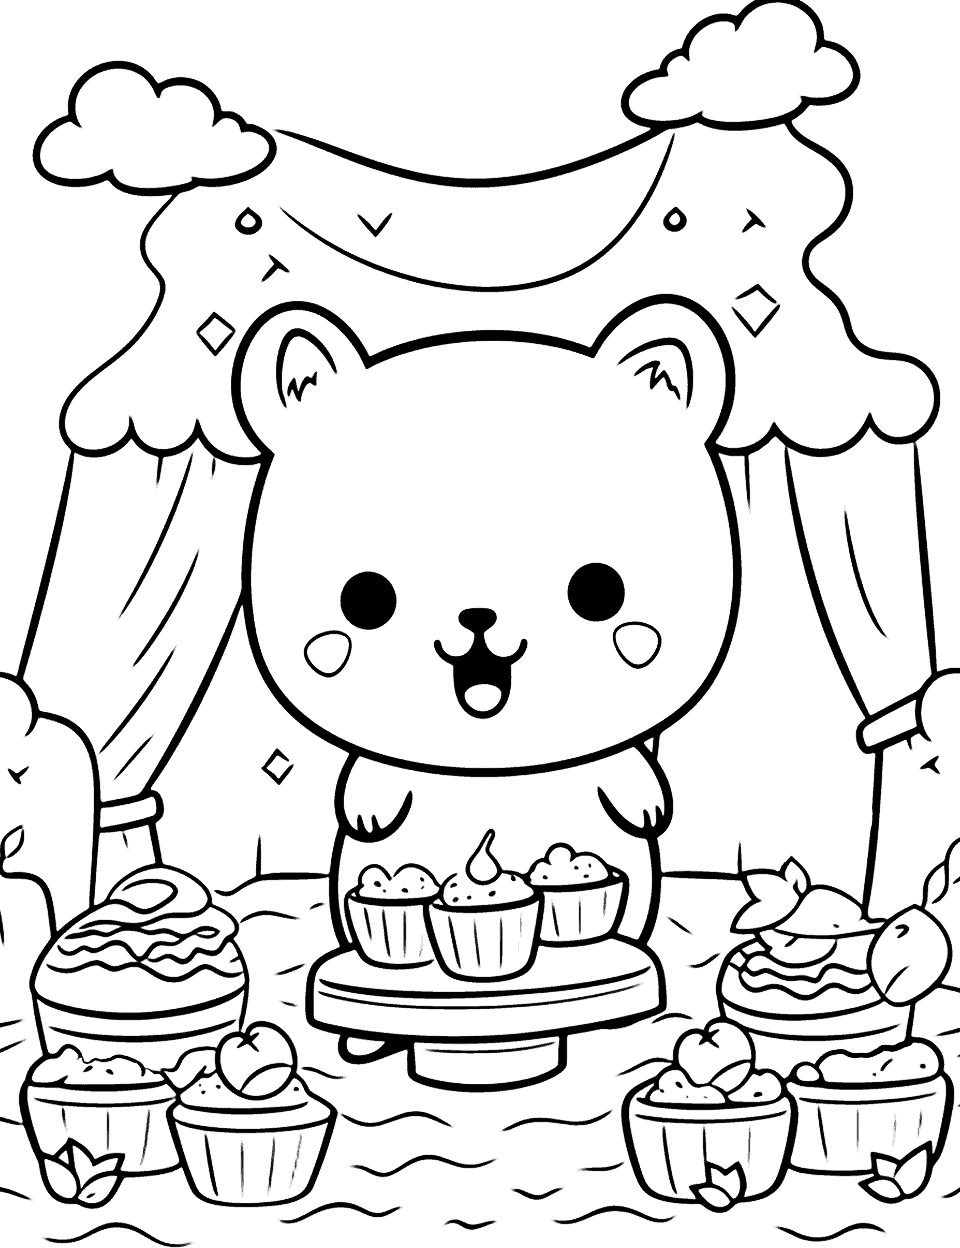 Dog's Dreamland Dessert Party Kawaii Coloring Page - A Kawaii dog throwing a dessert party in its dreamland.